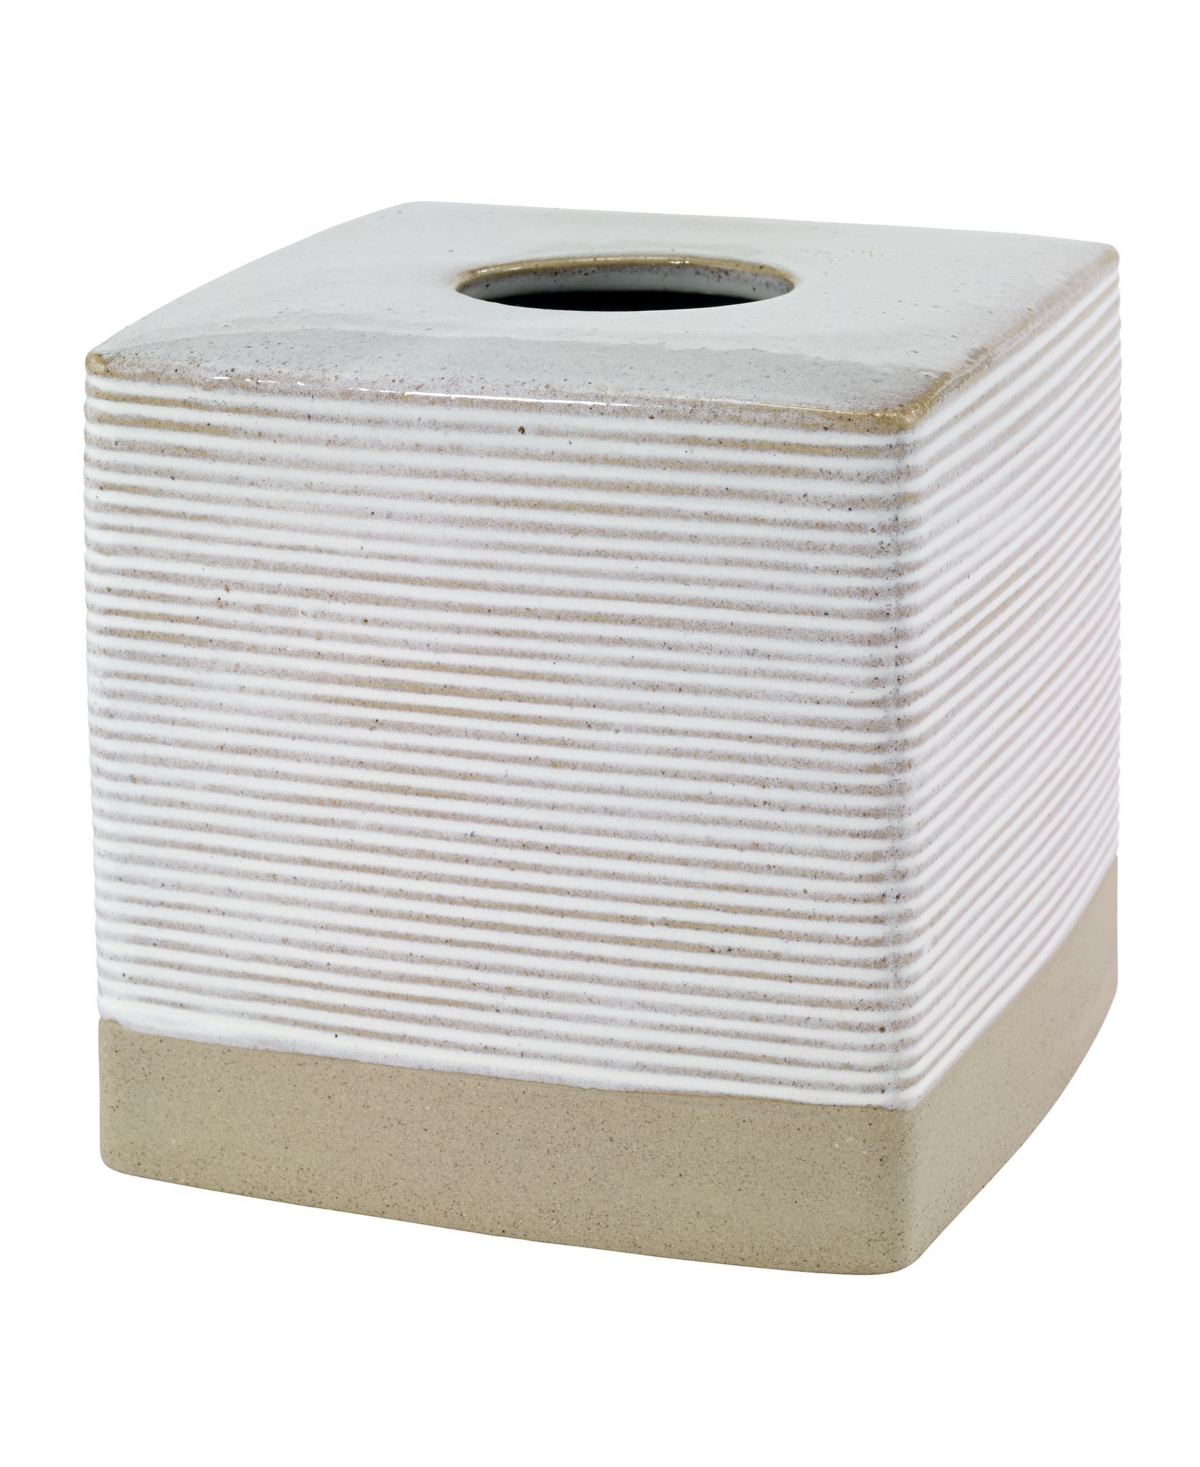 Drift Lines Textured Ribbed Ceramic Tissue Box Cover - Linen